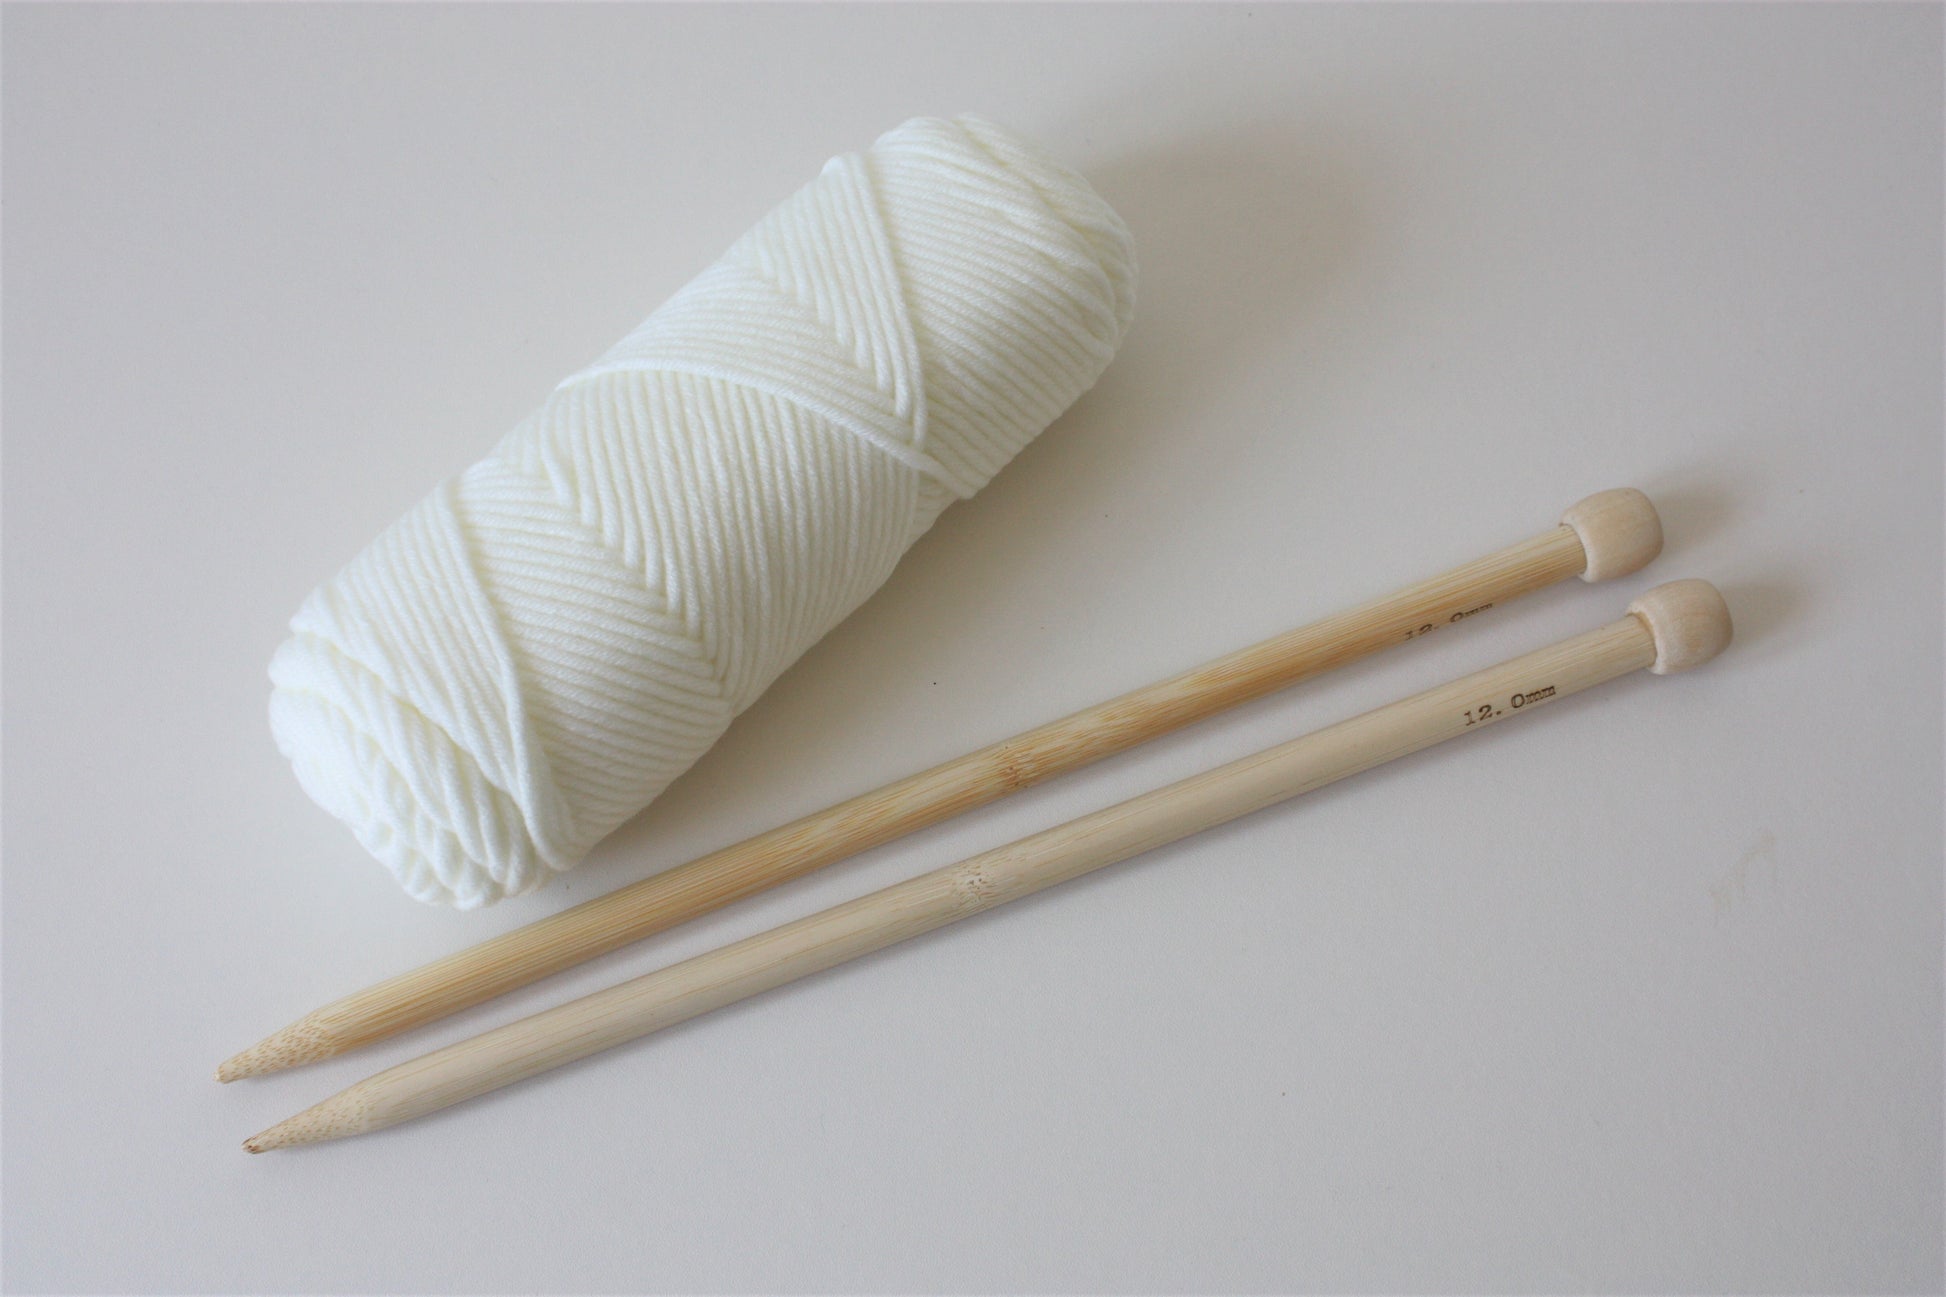 12 Wooden Single Point Knitting Needles